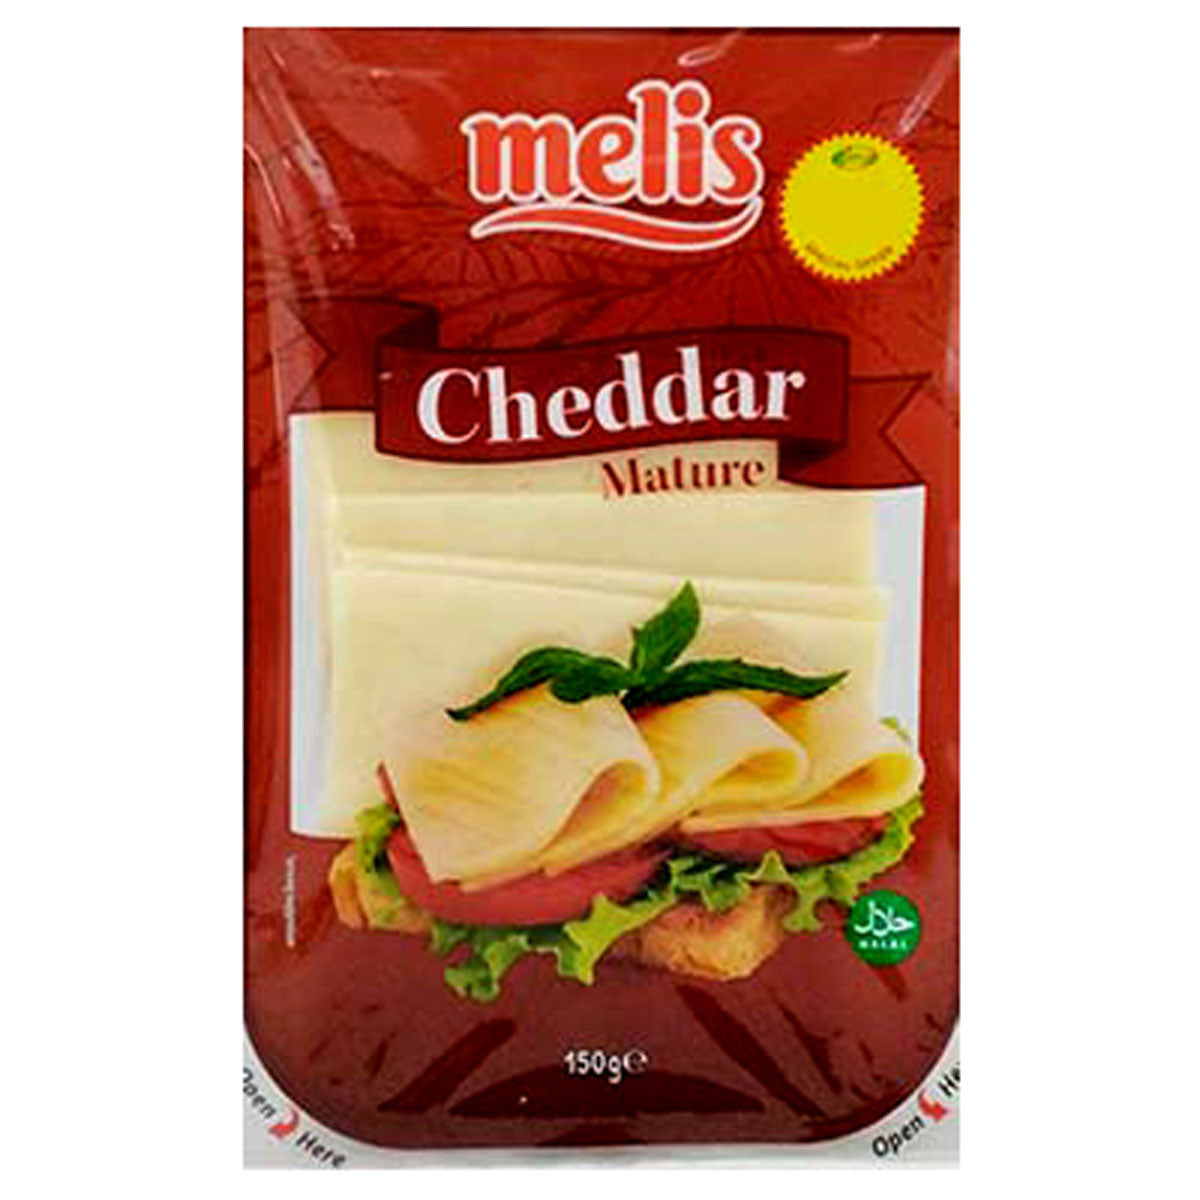 Melis - Cheddar Mature - 150g - Continental Food Store